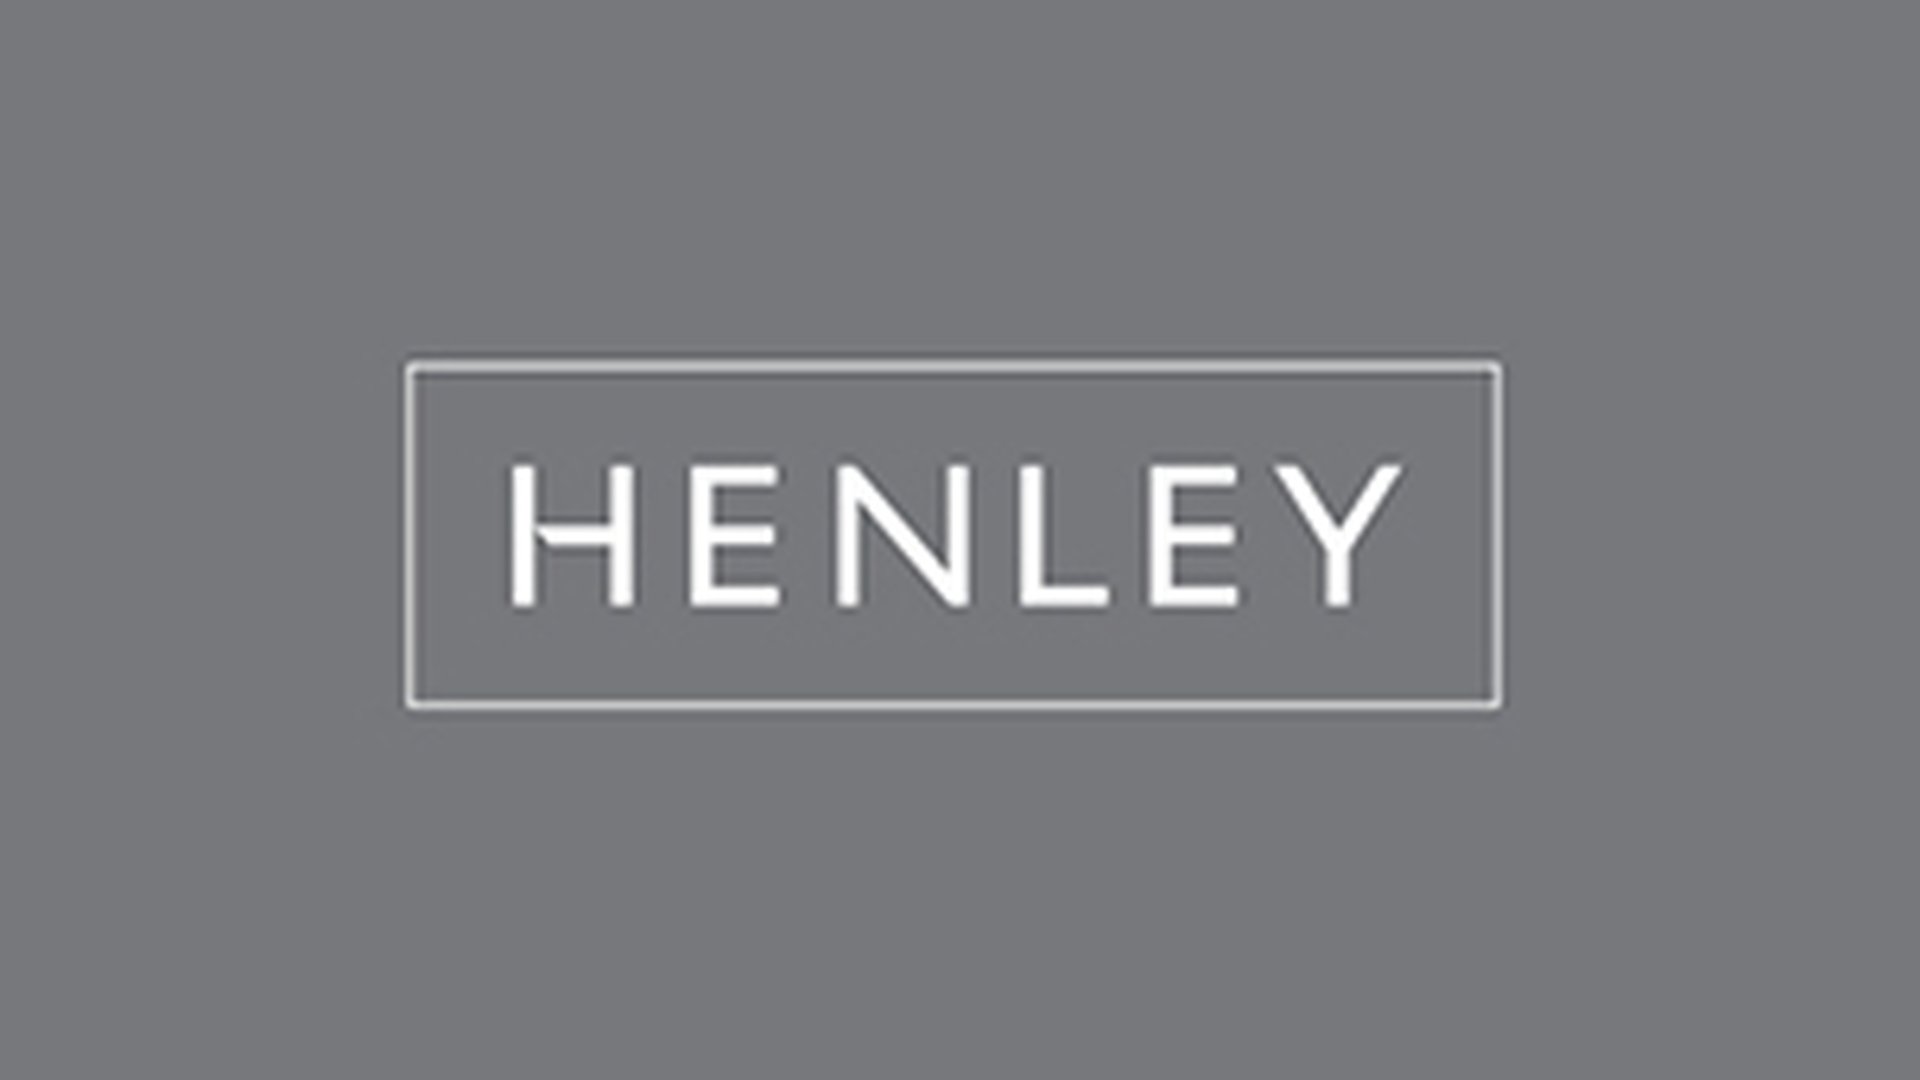 Henley Homes